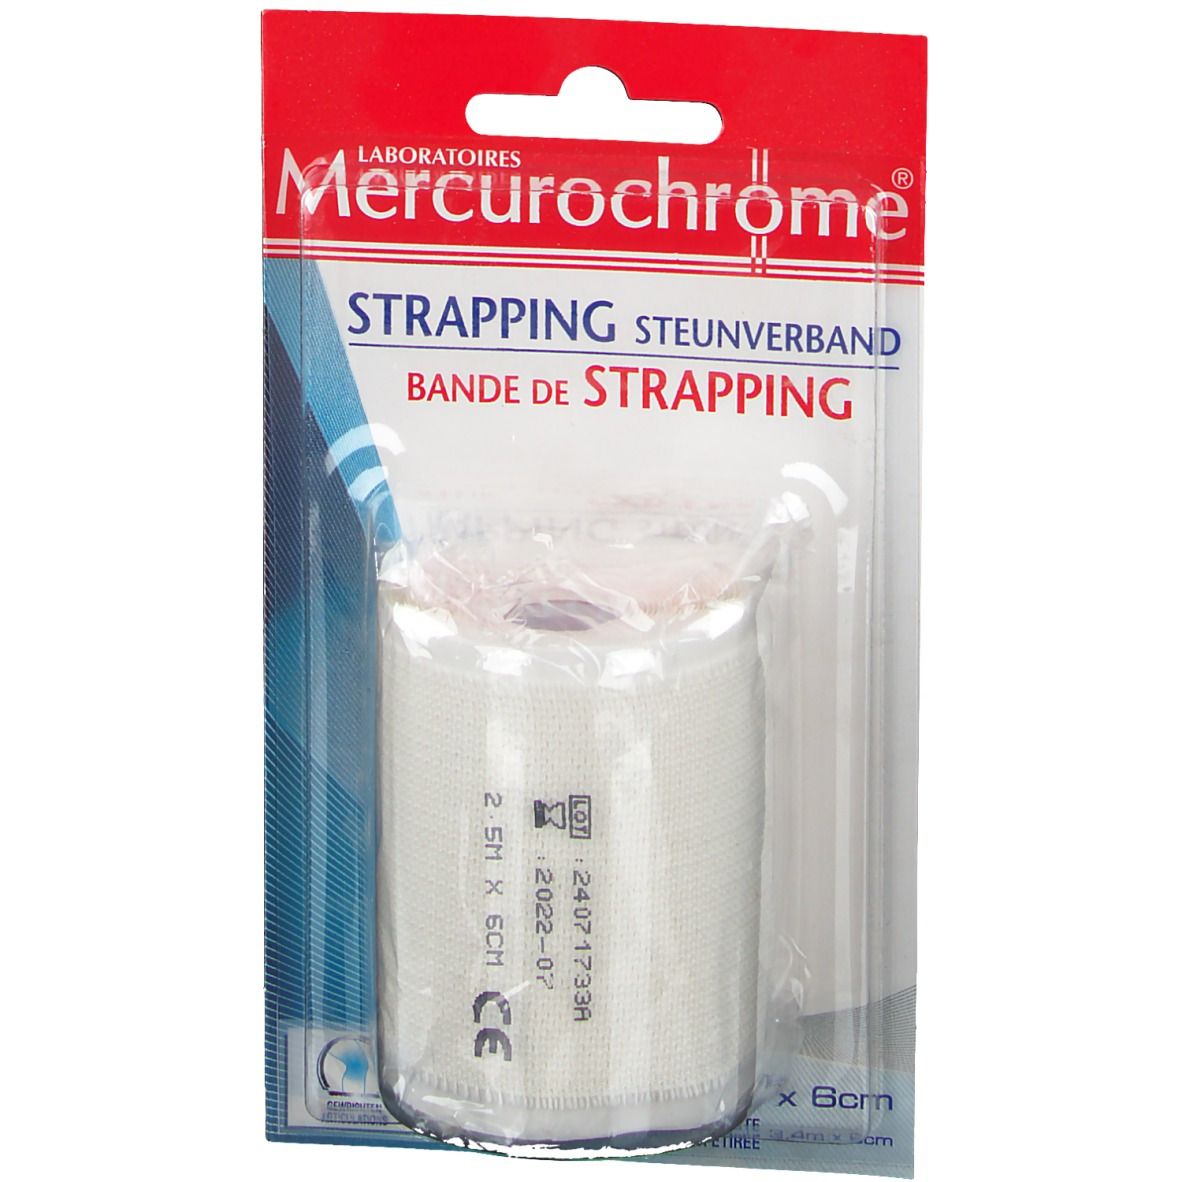 Mercurochrome® Bande de strapping 2,5 m x 6 cm